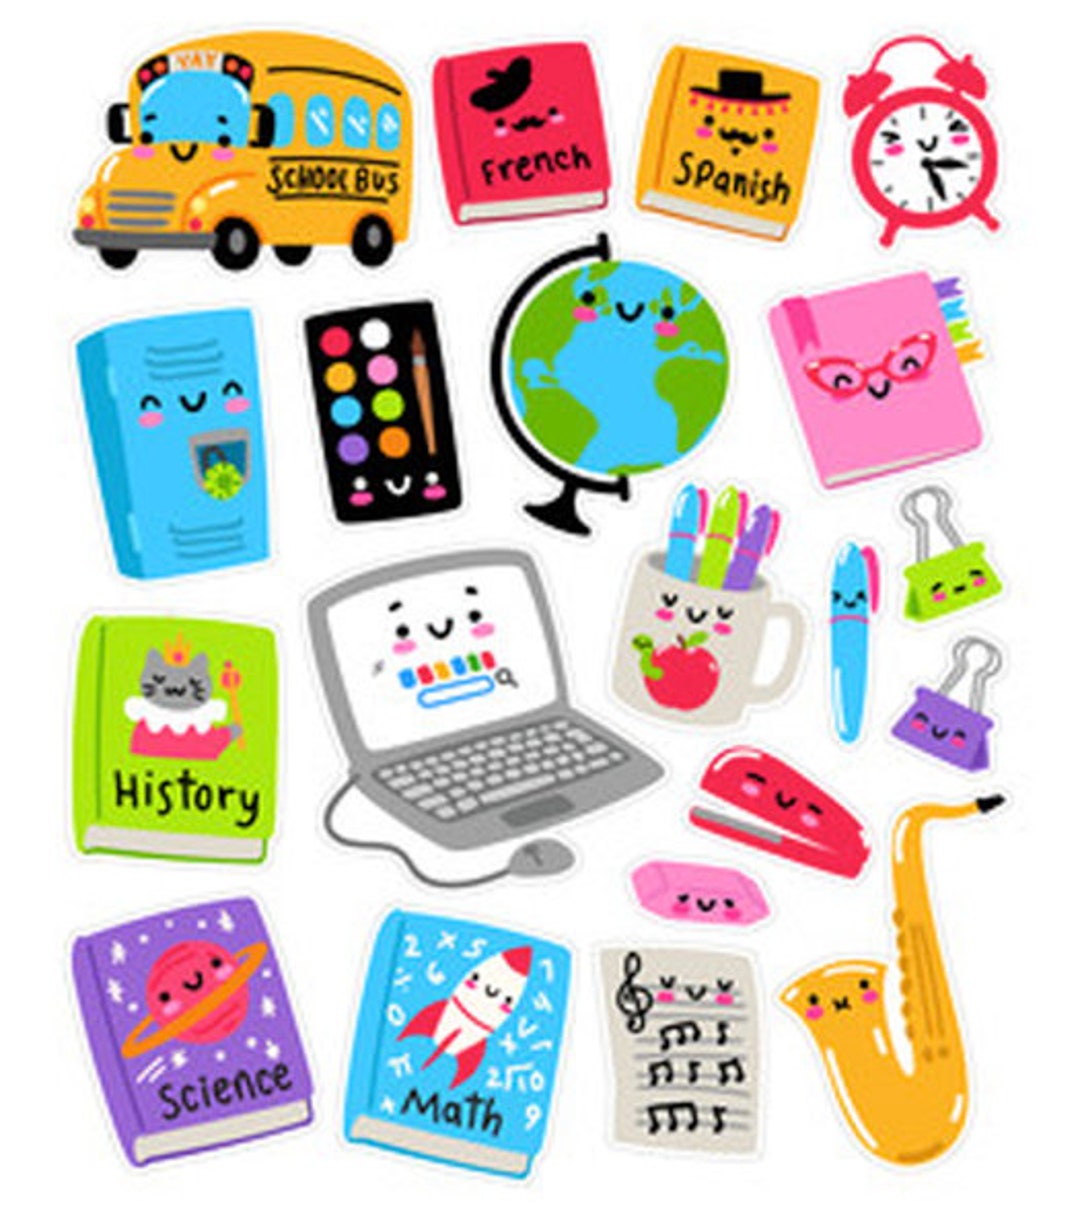 Kawaii School Supplies Stickers